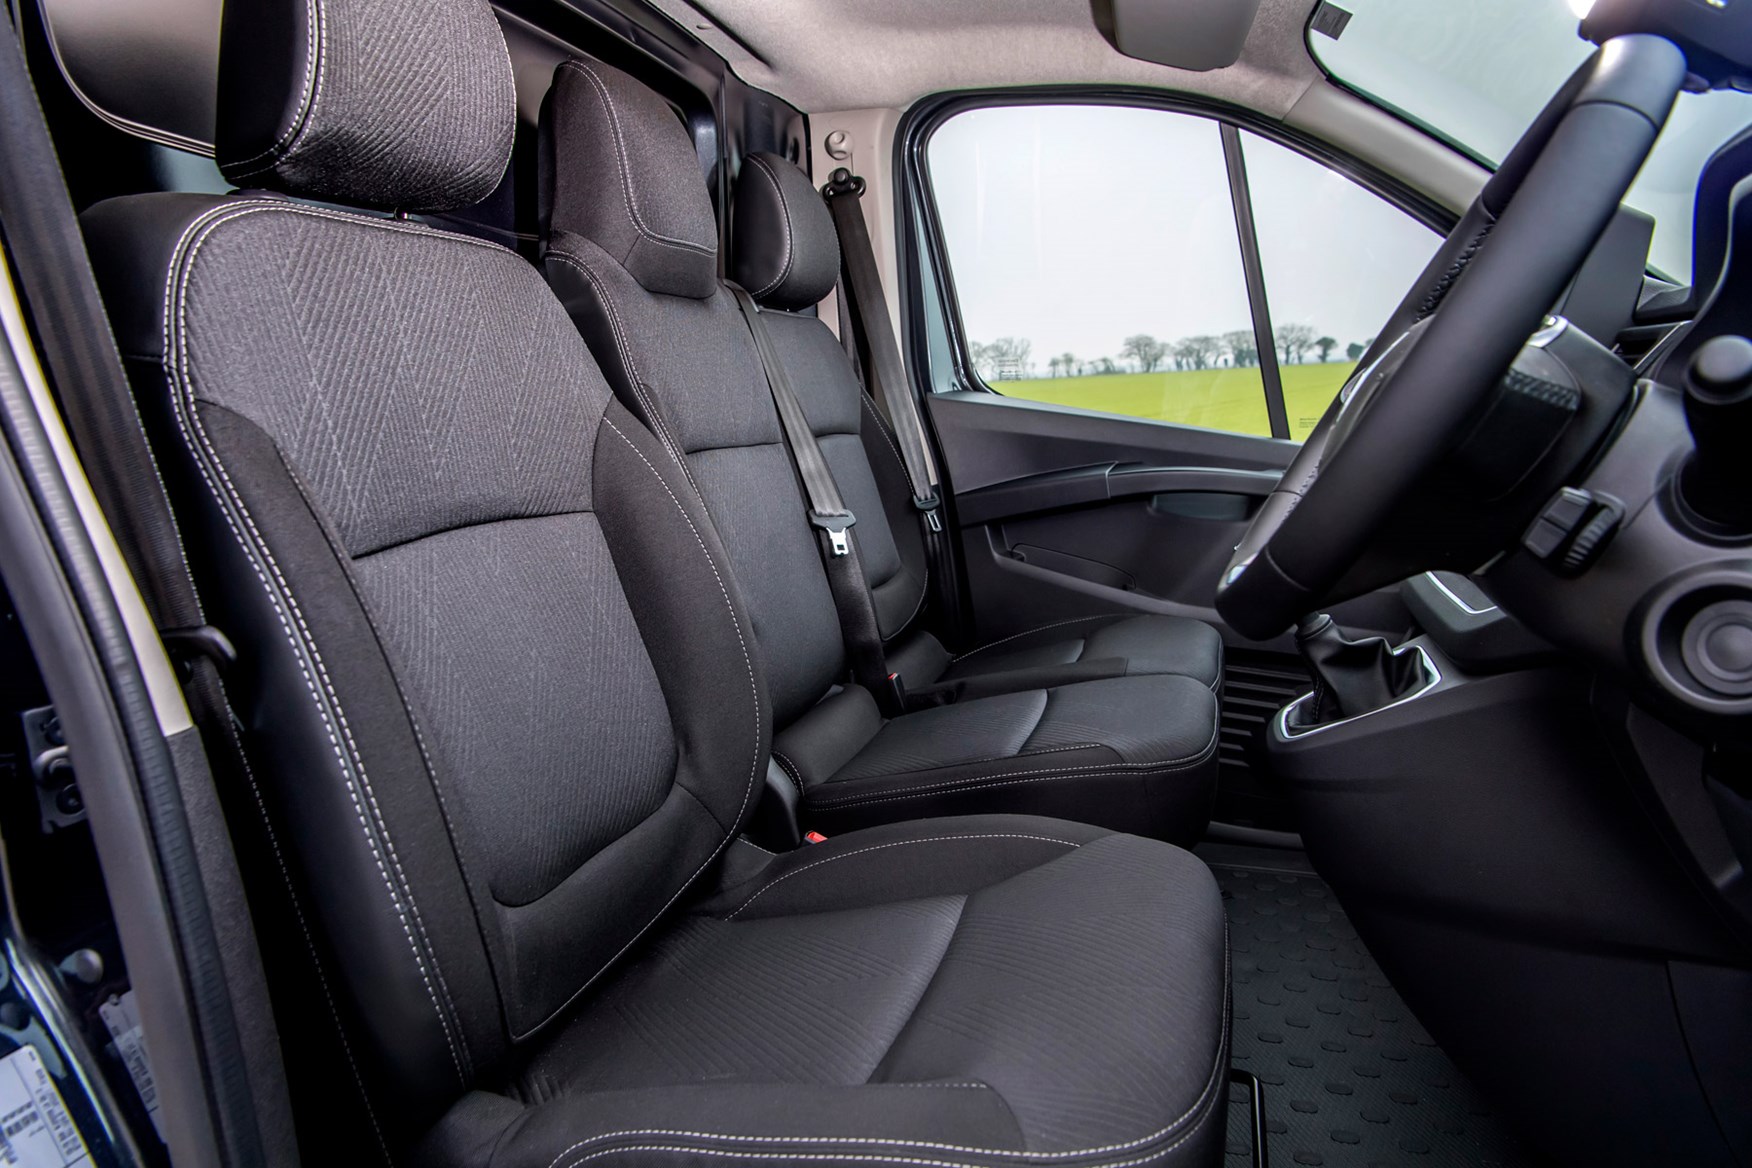 Renault Trafic van review - 2022 facelift model, cab interior, seats